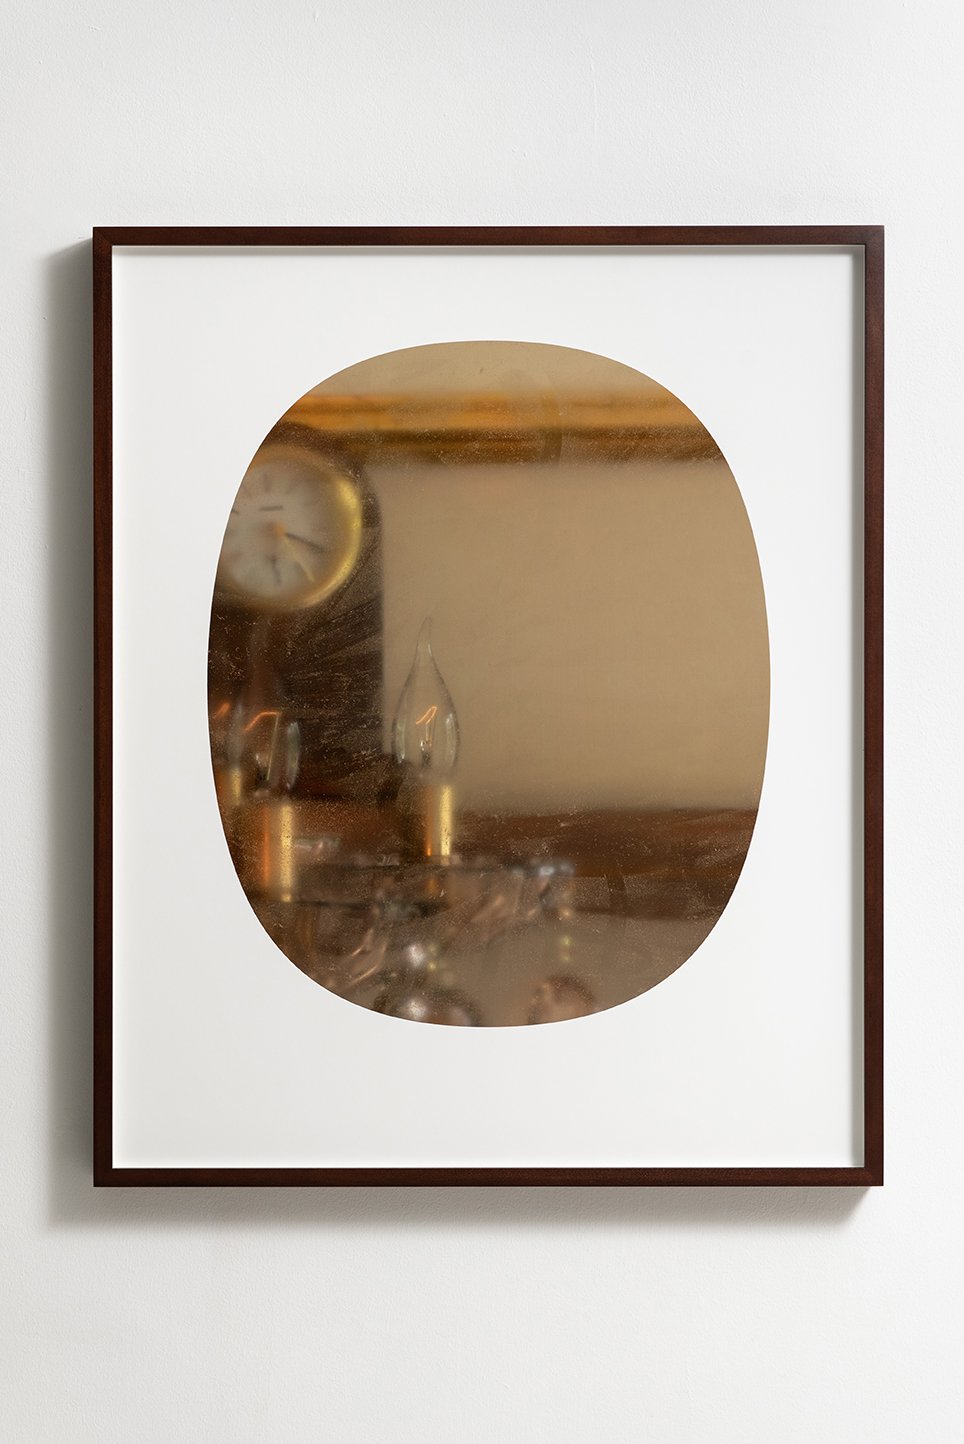   Untitled   2021, digital sculpture, inkjet printed on paper in artist’s frame (Mahogany wood), 105.4 × 86.9 × 5 cm 